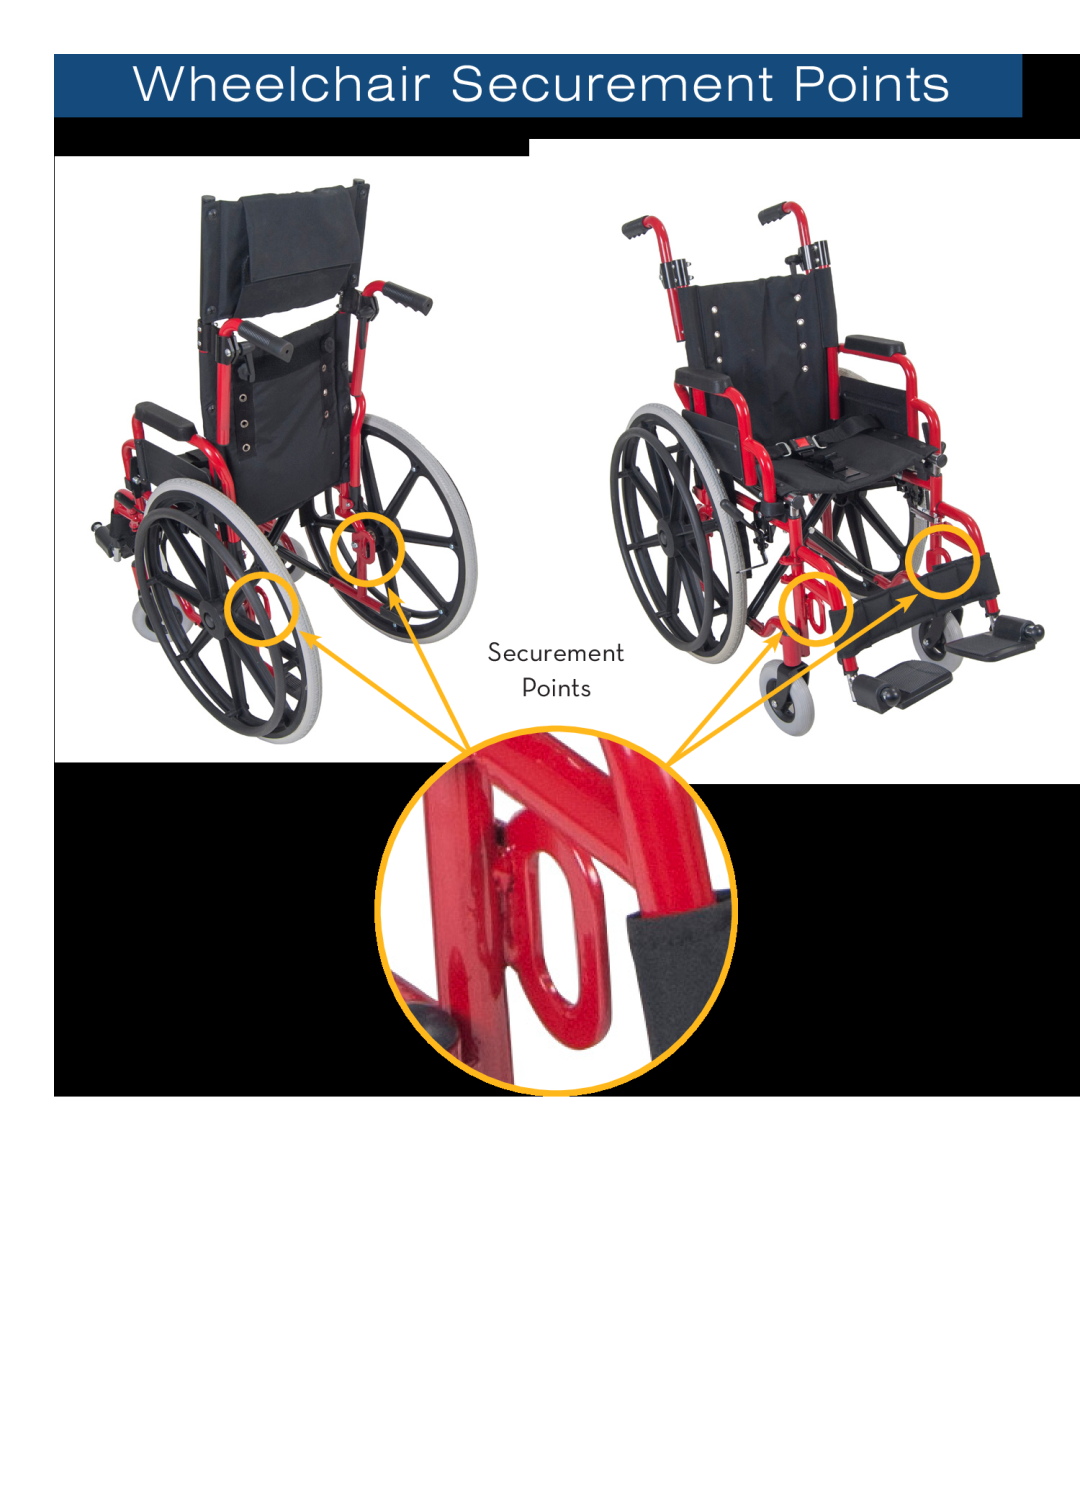 Drive Medical Design wb 1400, wb 1200 manual Wheelchair Securement Points, Securement Points  